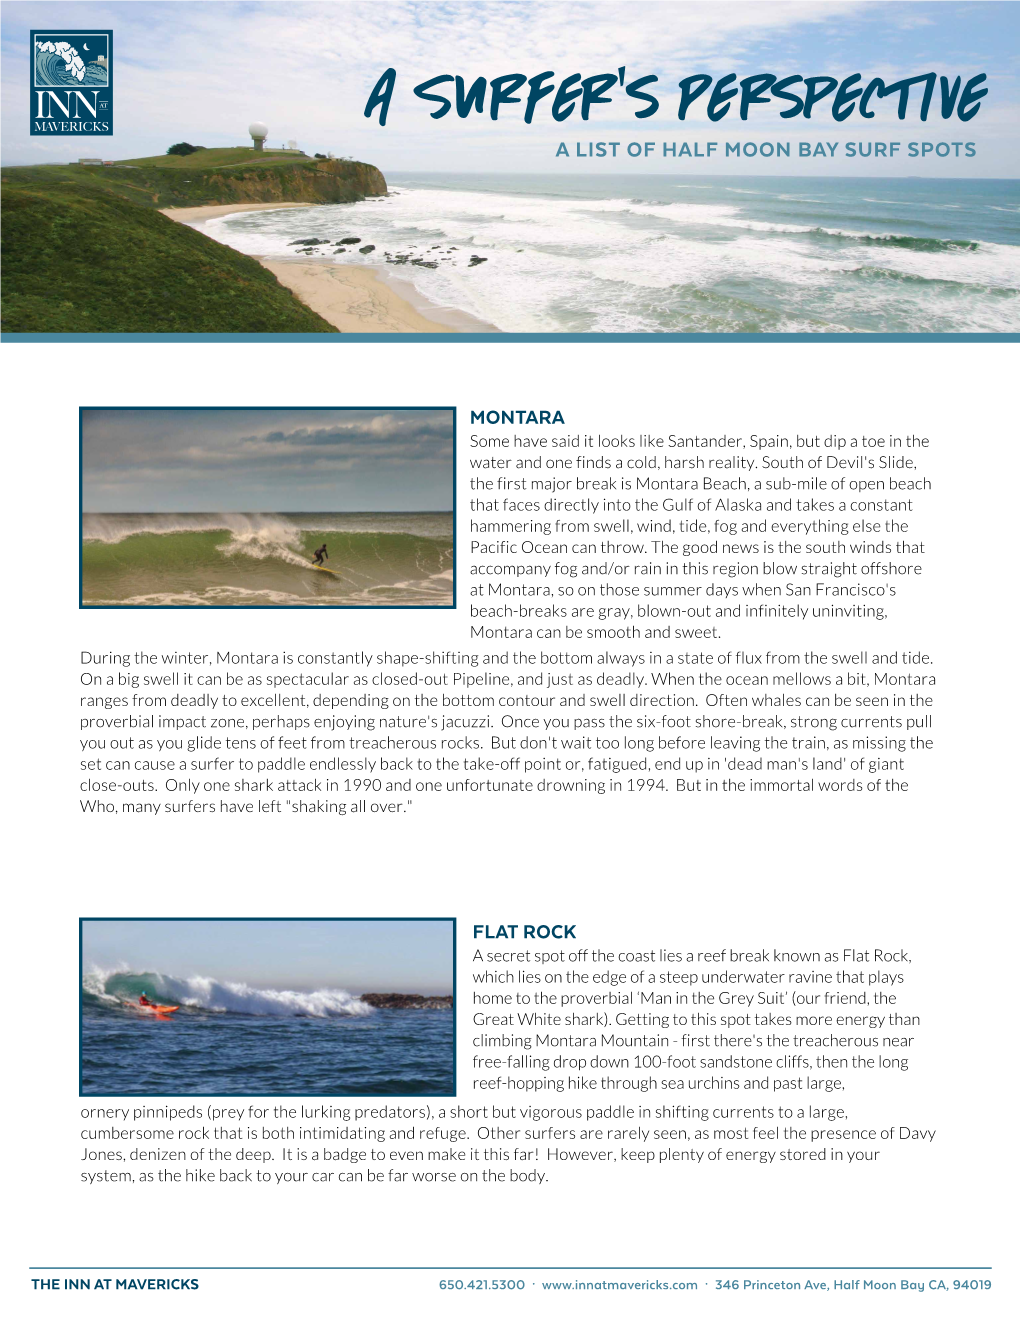 A List of Half Moon Bay Surf Spots